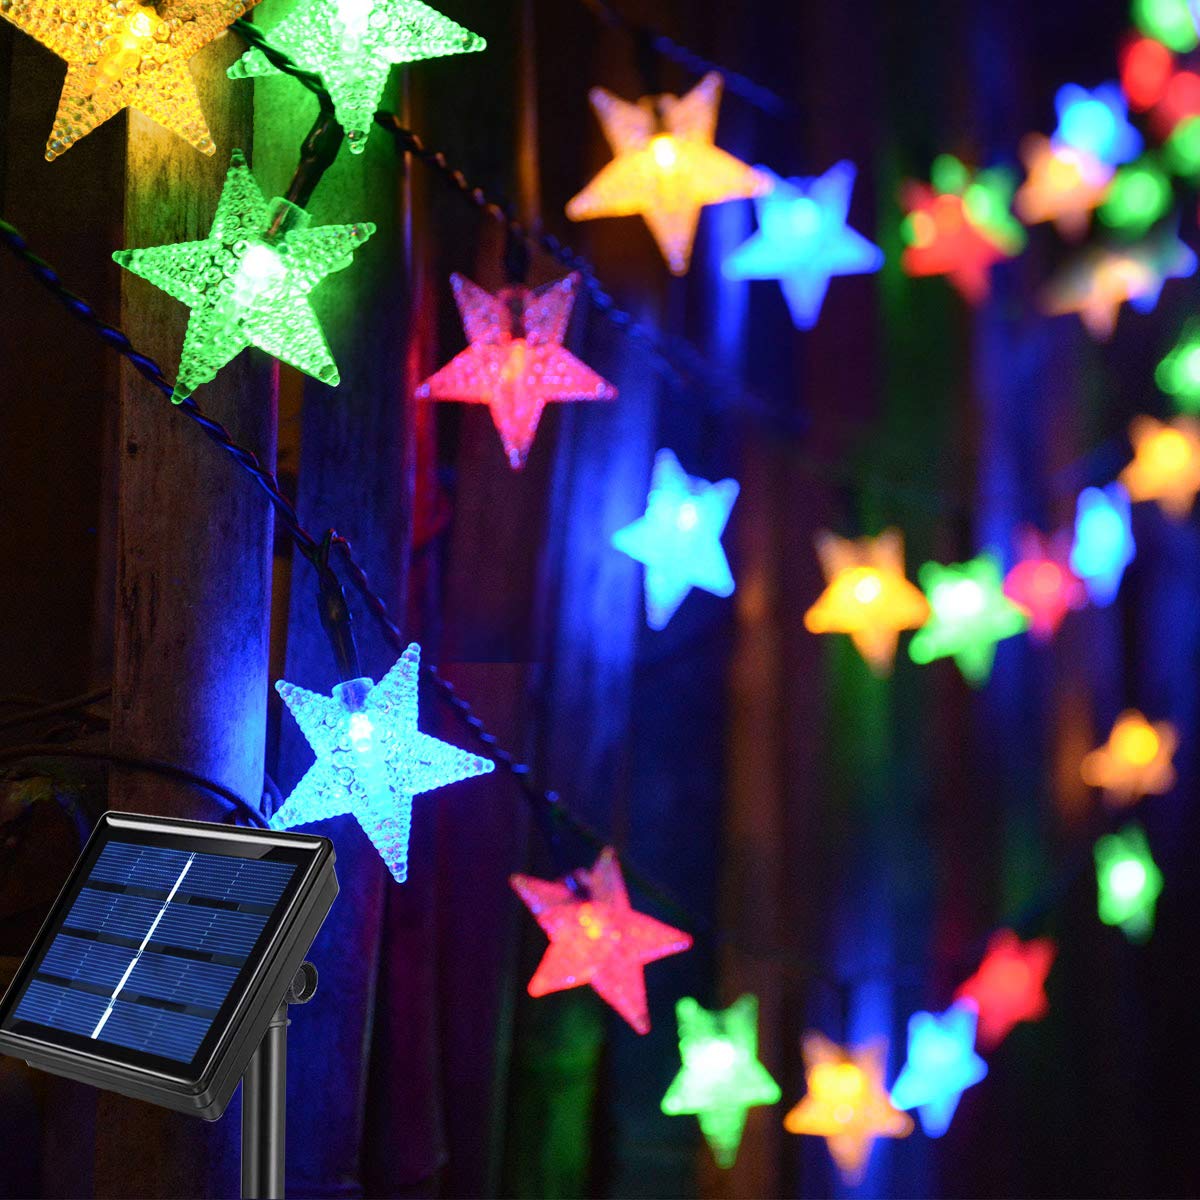 Abkshine Solar String Lights Outdoor, 50ft 120LED Star Fairy Lights Solar Powered, Waterproof Twinkle Accent Lights for Patio Canopy,Gazebo,Porch,Pergola,Balcony,Garden,Xmas Trees Decor,Multicolored